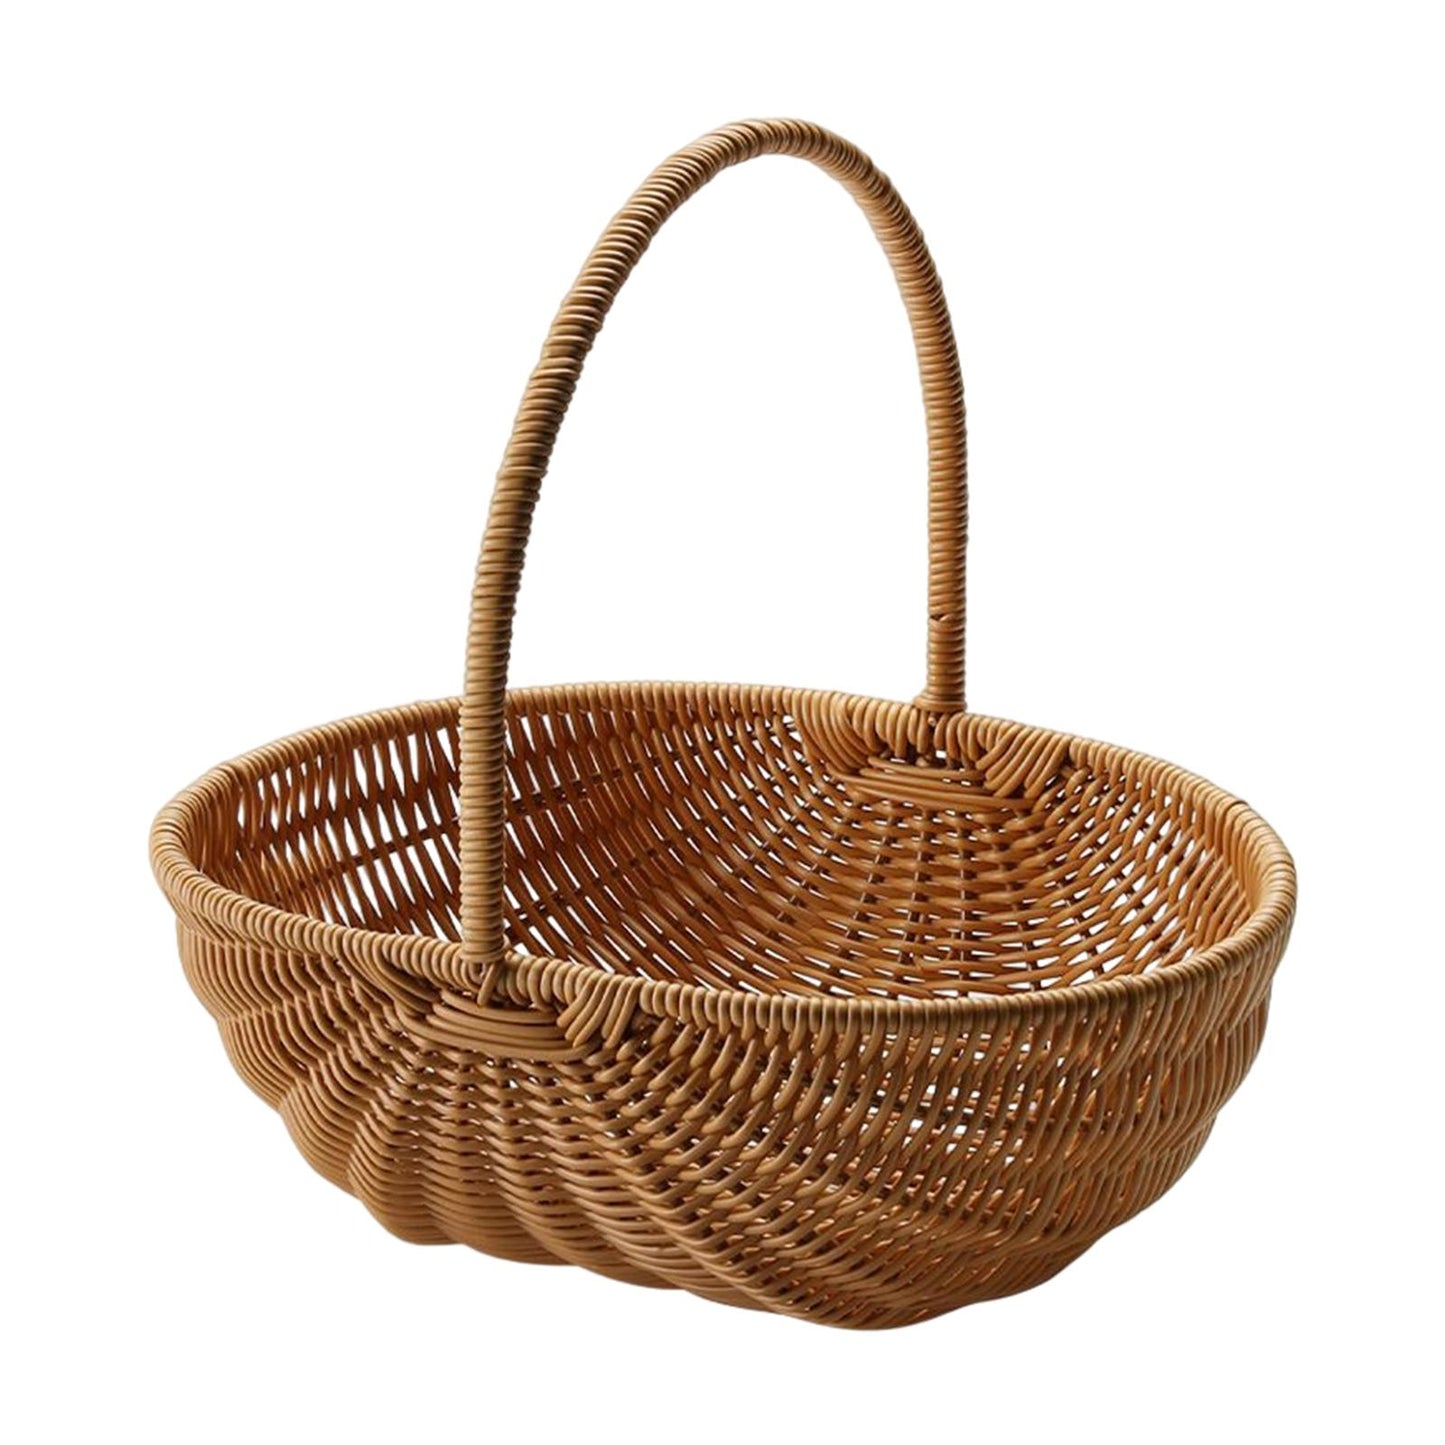 Hand Woven Fungi Basket with Handle - Handmade Wicker Mushroom Basket